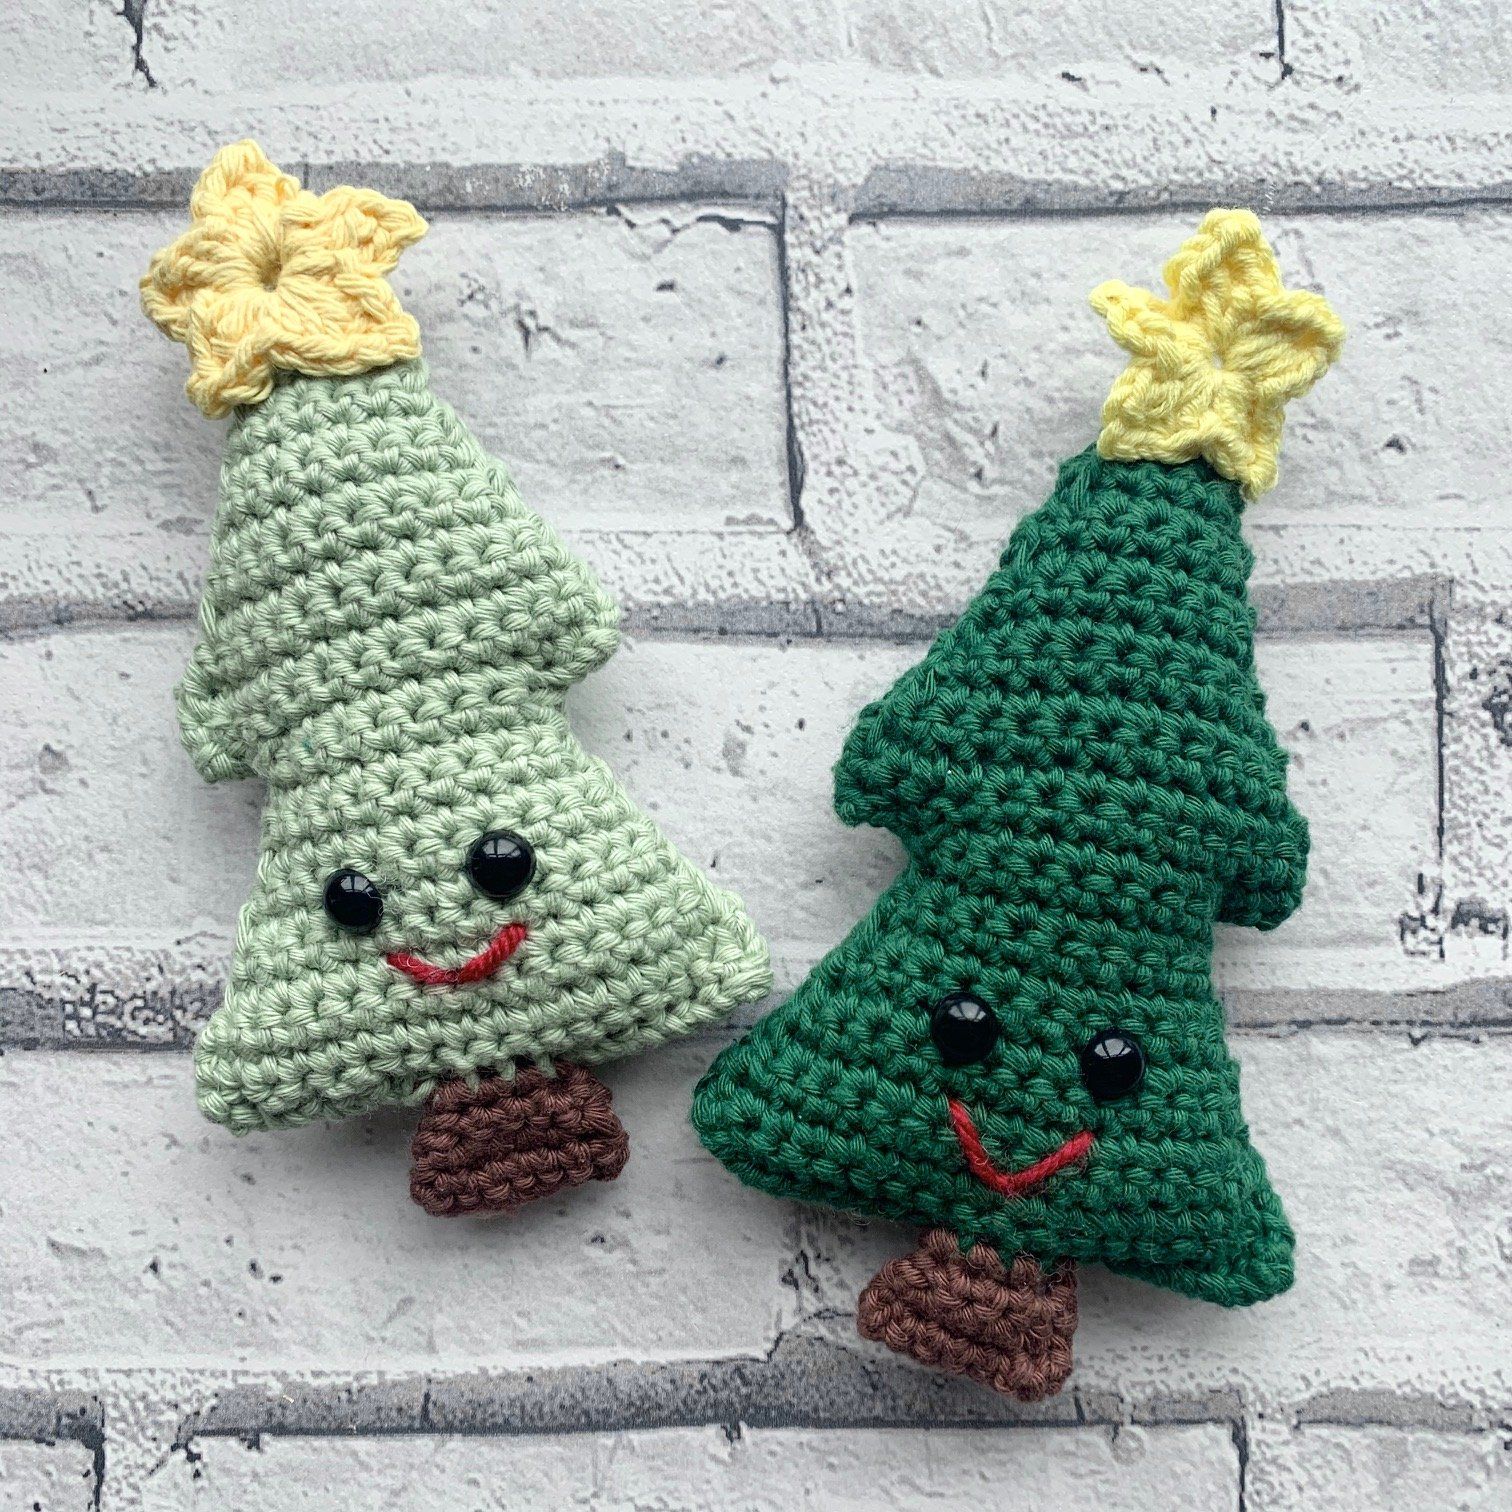 How to crochet a Christmas Tree